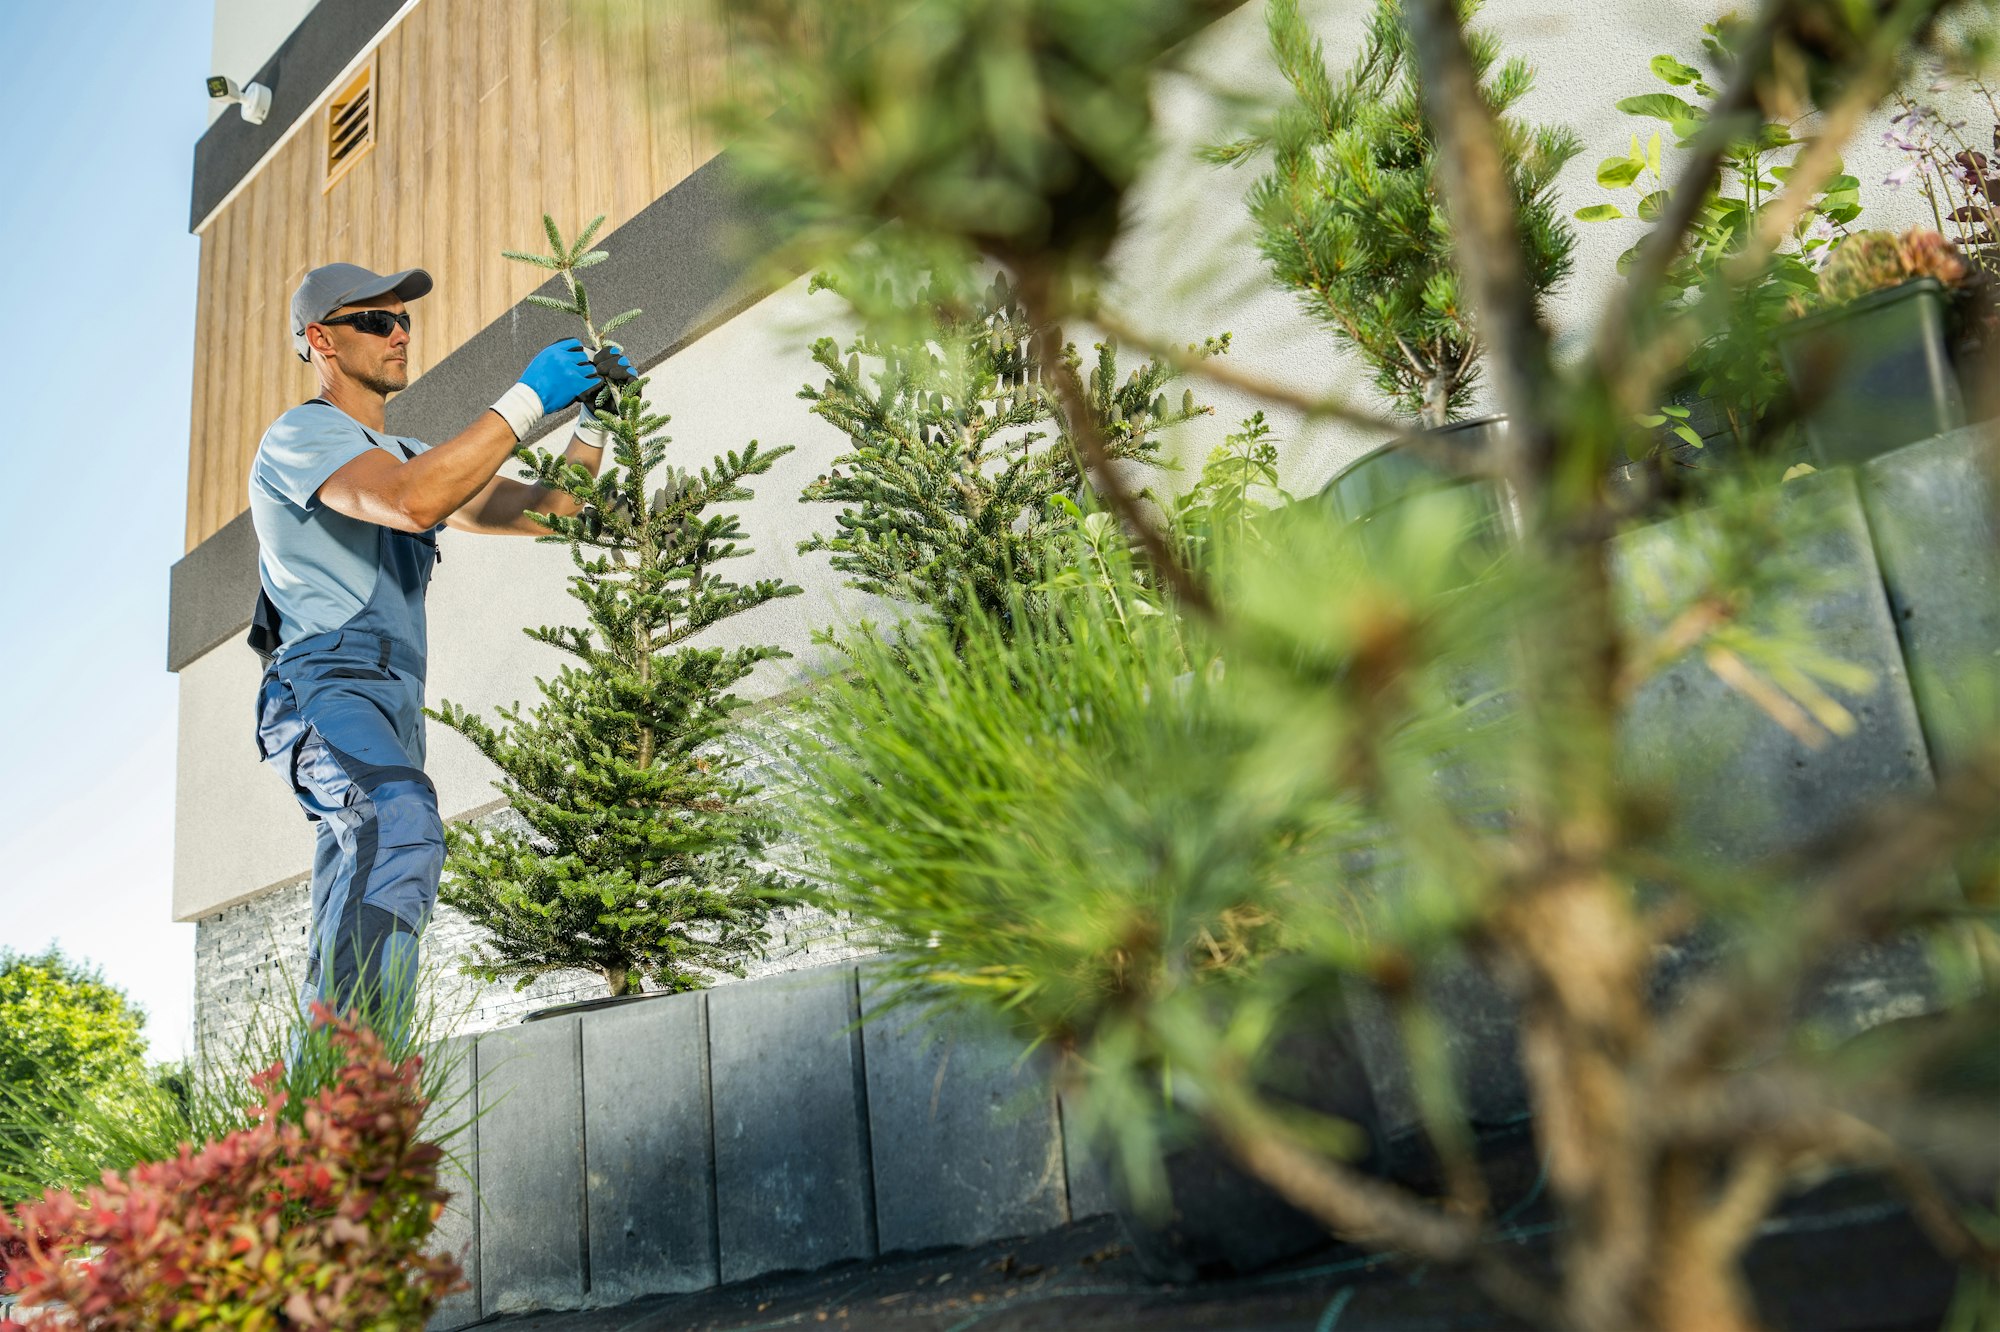 Gardener Planting Large Spruce Trees in a Residential Garden